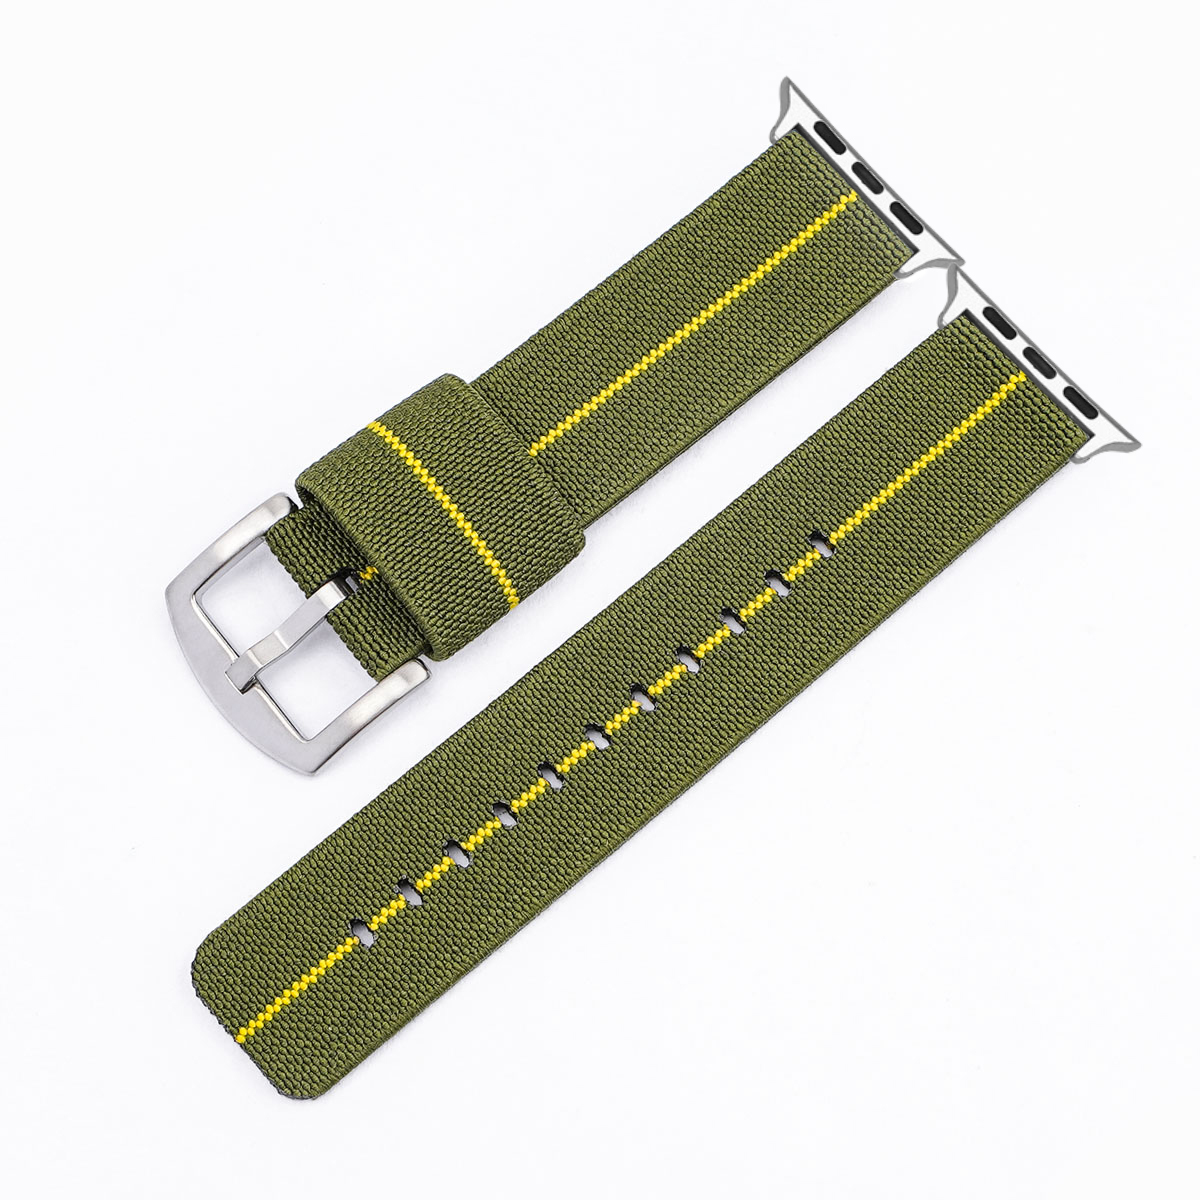 Braccialetti in nylon per cinturino in tessuto militare CBIW276 per cinturini in nylon per Apple watchbands per banda IWATCH